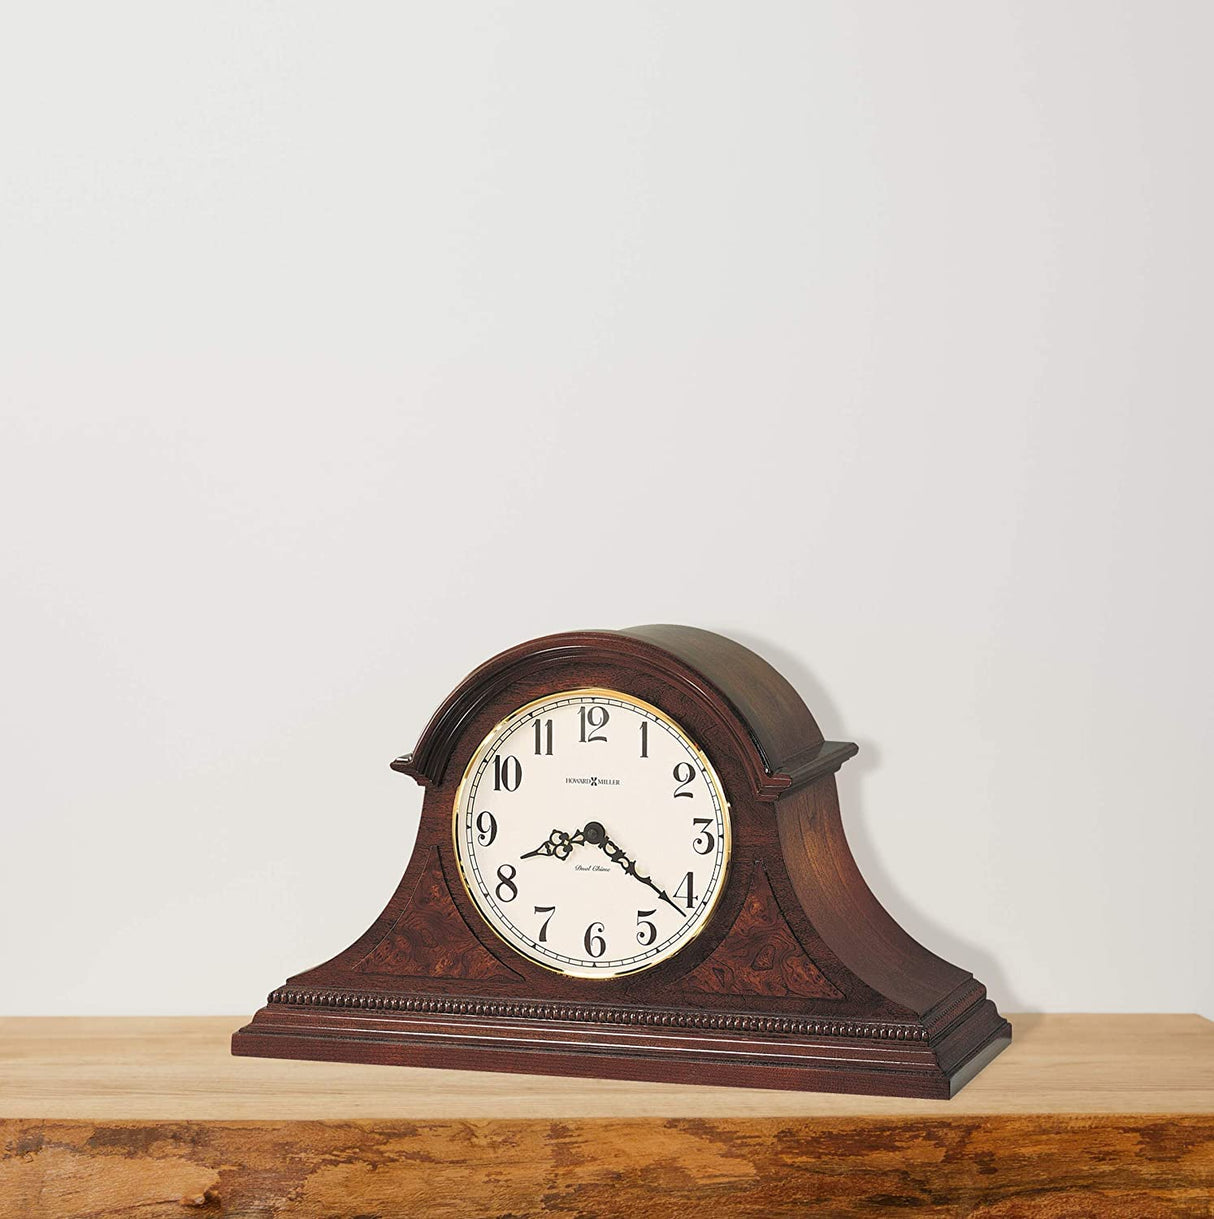 Howard Miller Fleetwood Mantel Clock 630-122 - Windsor Cherry Finish Wood Frame, Decorative Molding, Vintage Home Décor, Volume Control, Quartz, Dual-Chime Movement